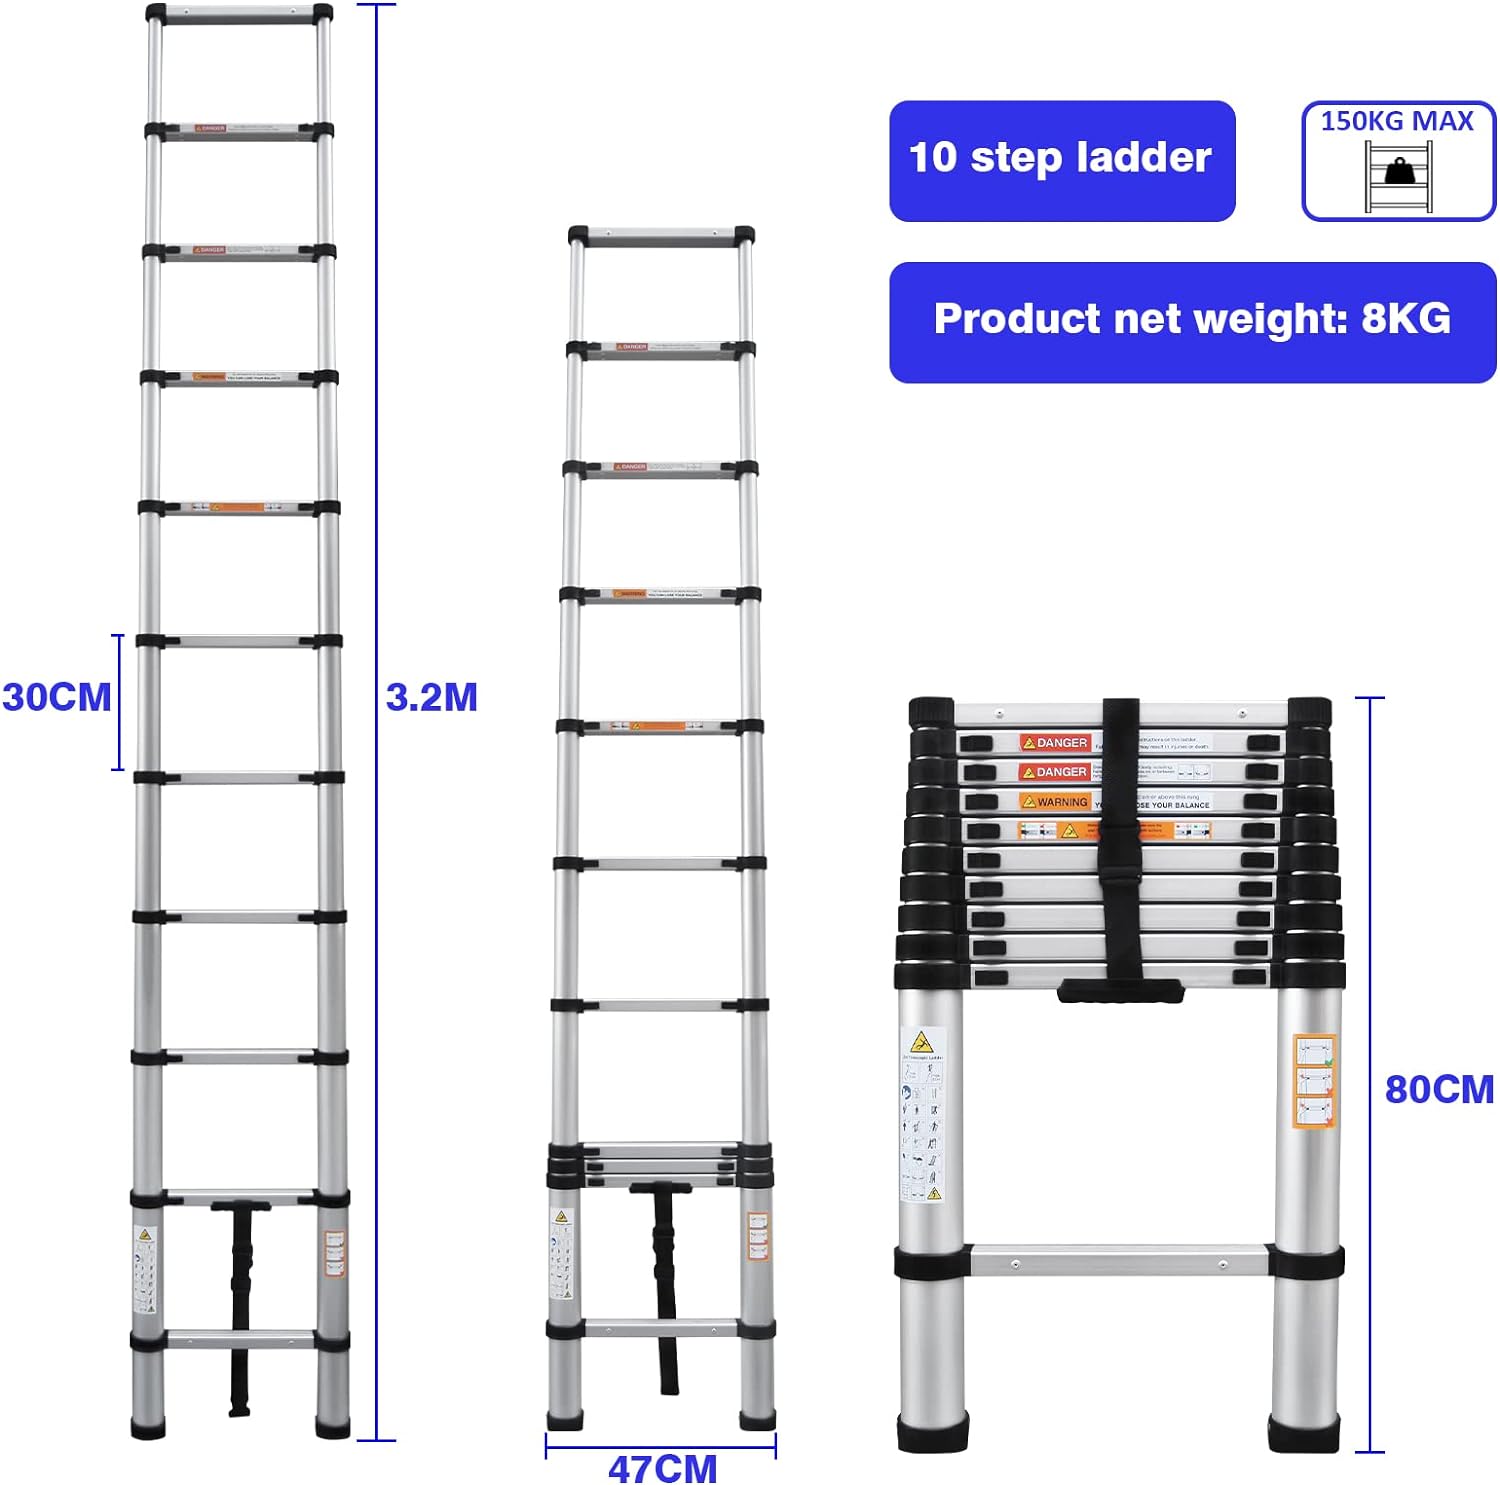 Qimu Telescoping Ladder,Aluminum Lightweight Extension Ladder,330lbs Max Capacity,Non-Slip Sturdy Multi-Purpose Telescope Portable L